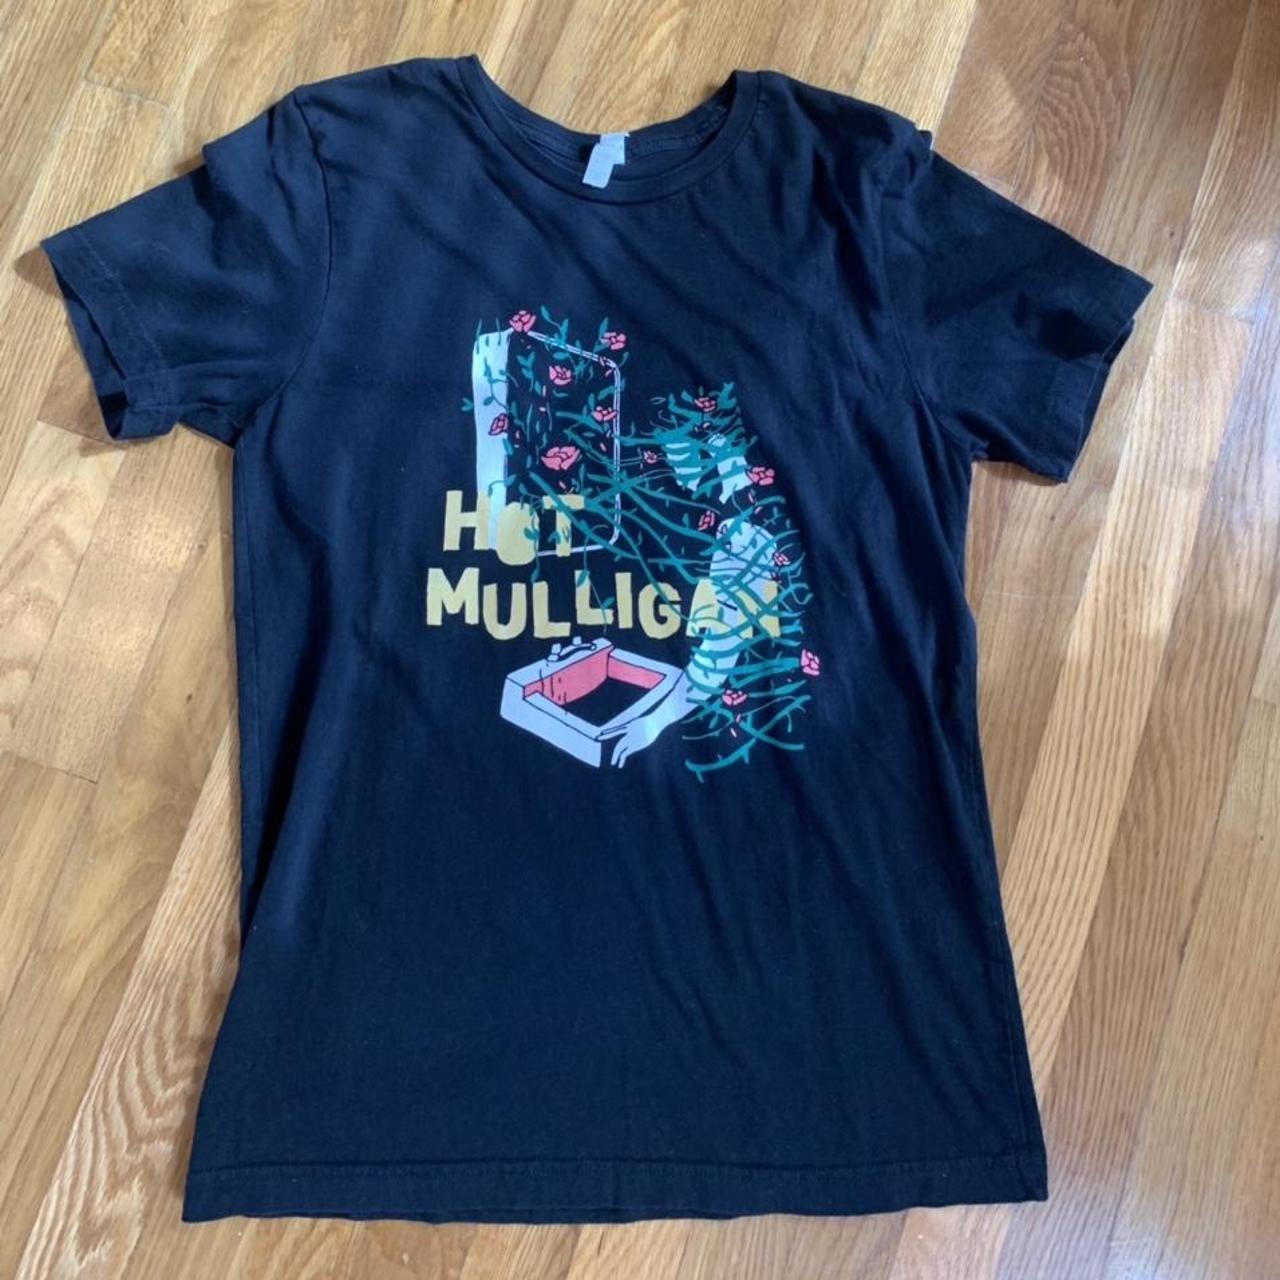 Product Image 2 - Hot mulligan shirt. Women’s medium


Tags: